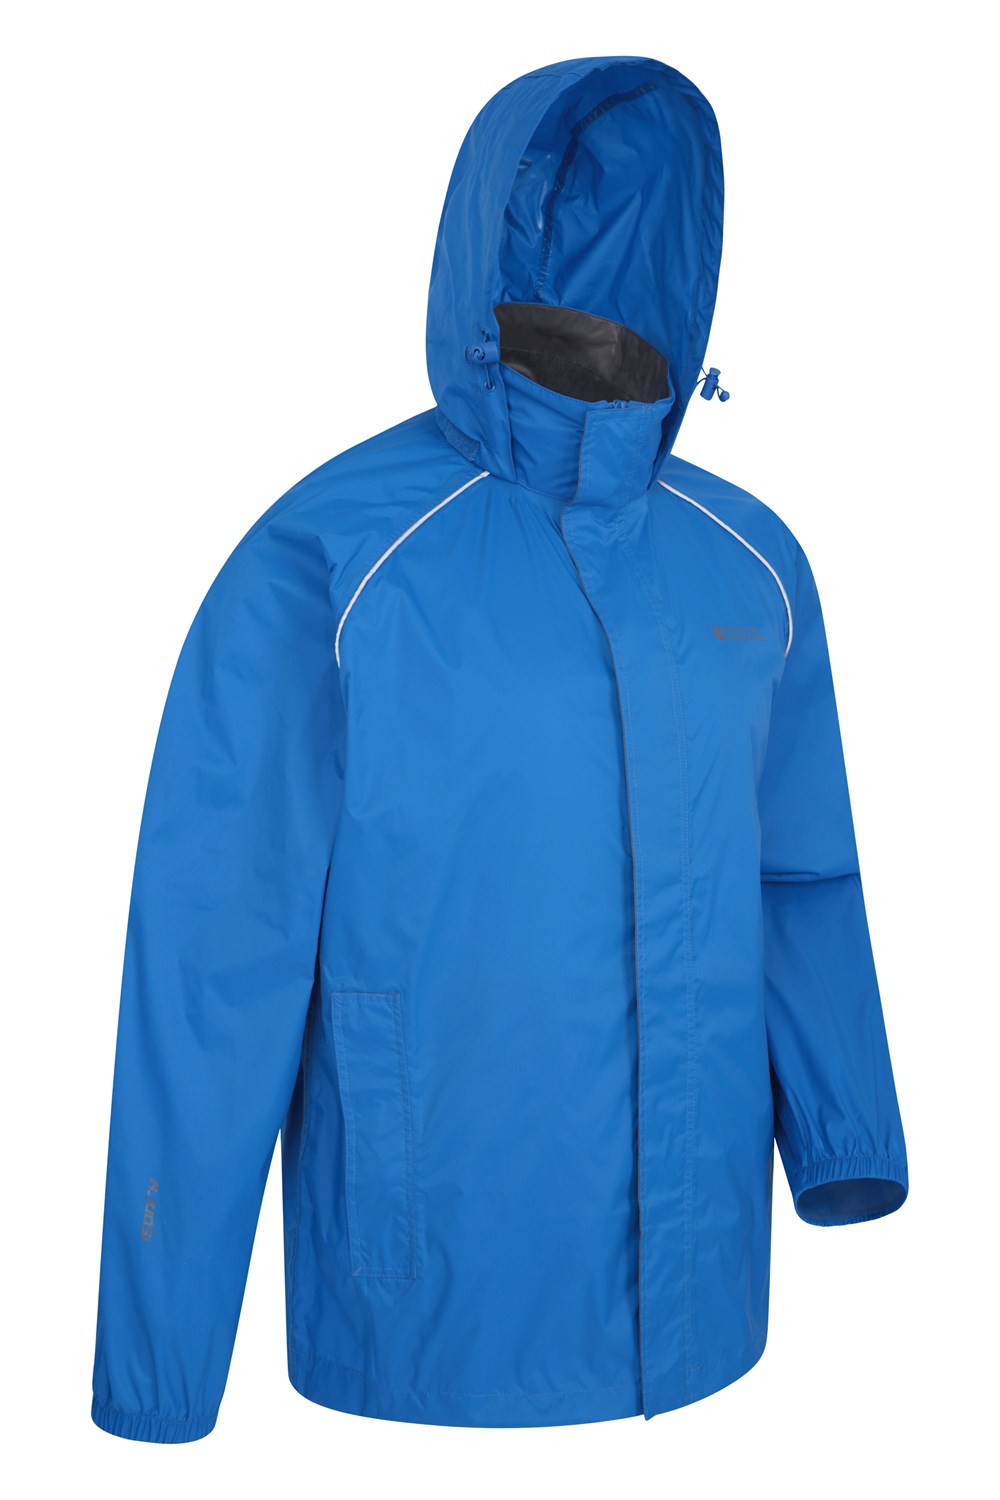 Mountain Warehouse Men's Waterproof Rain Jacket Breathable Coat ...